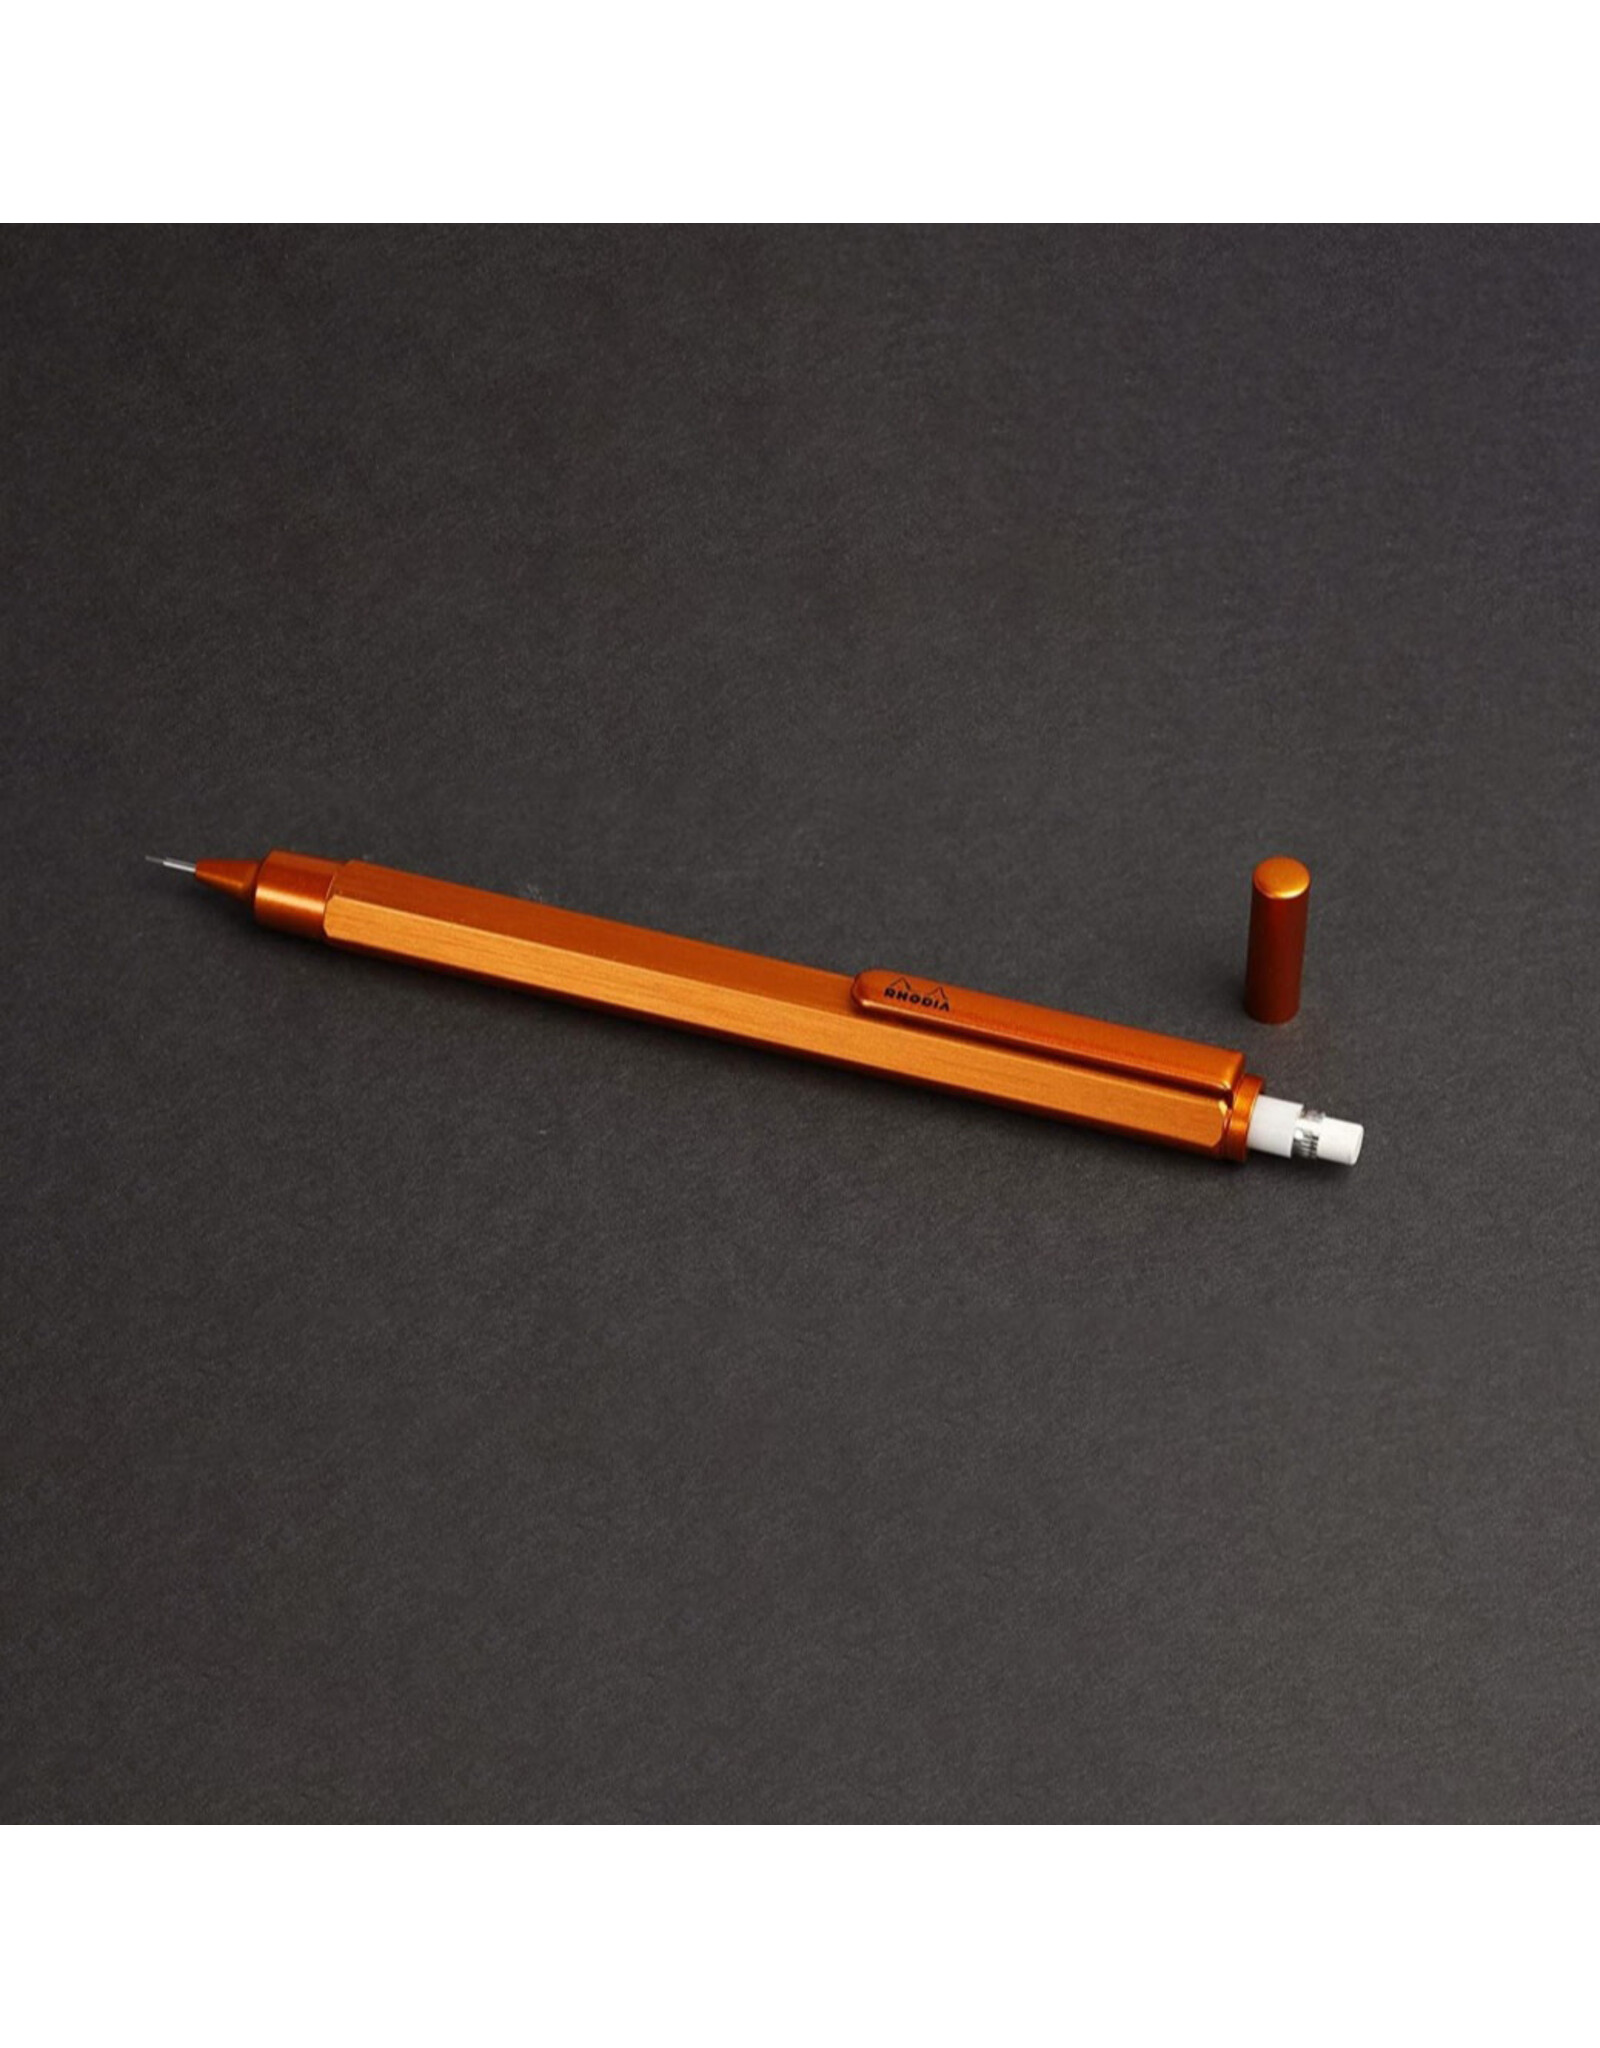 Rhodia Script Mechanical Pencil Orange